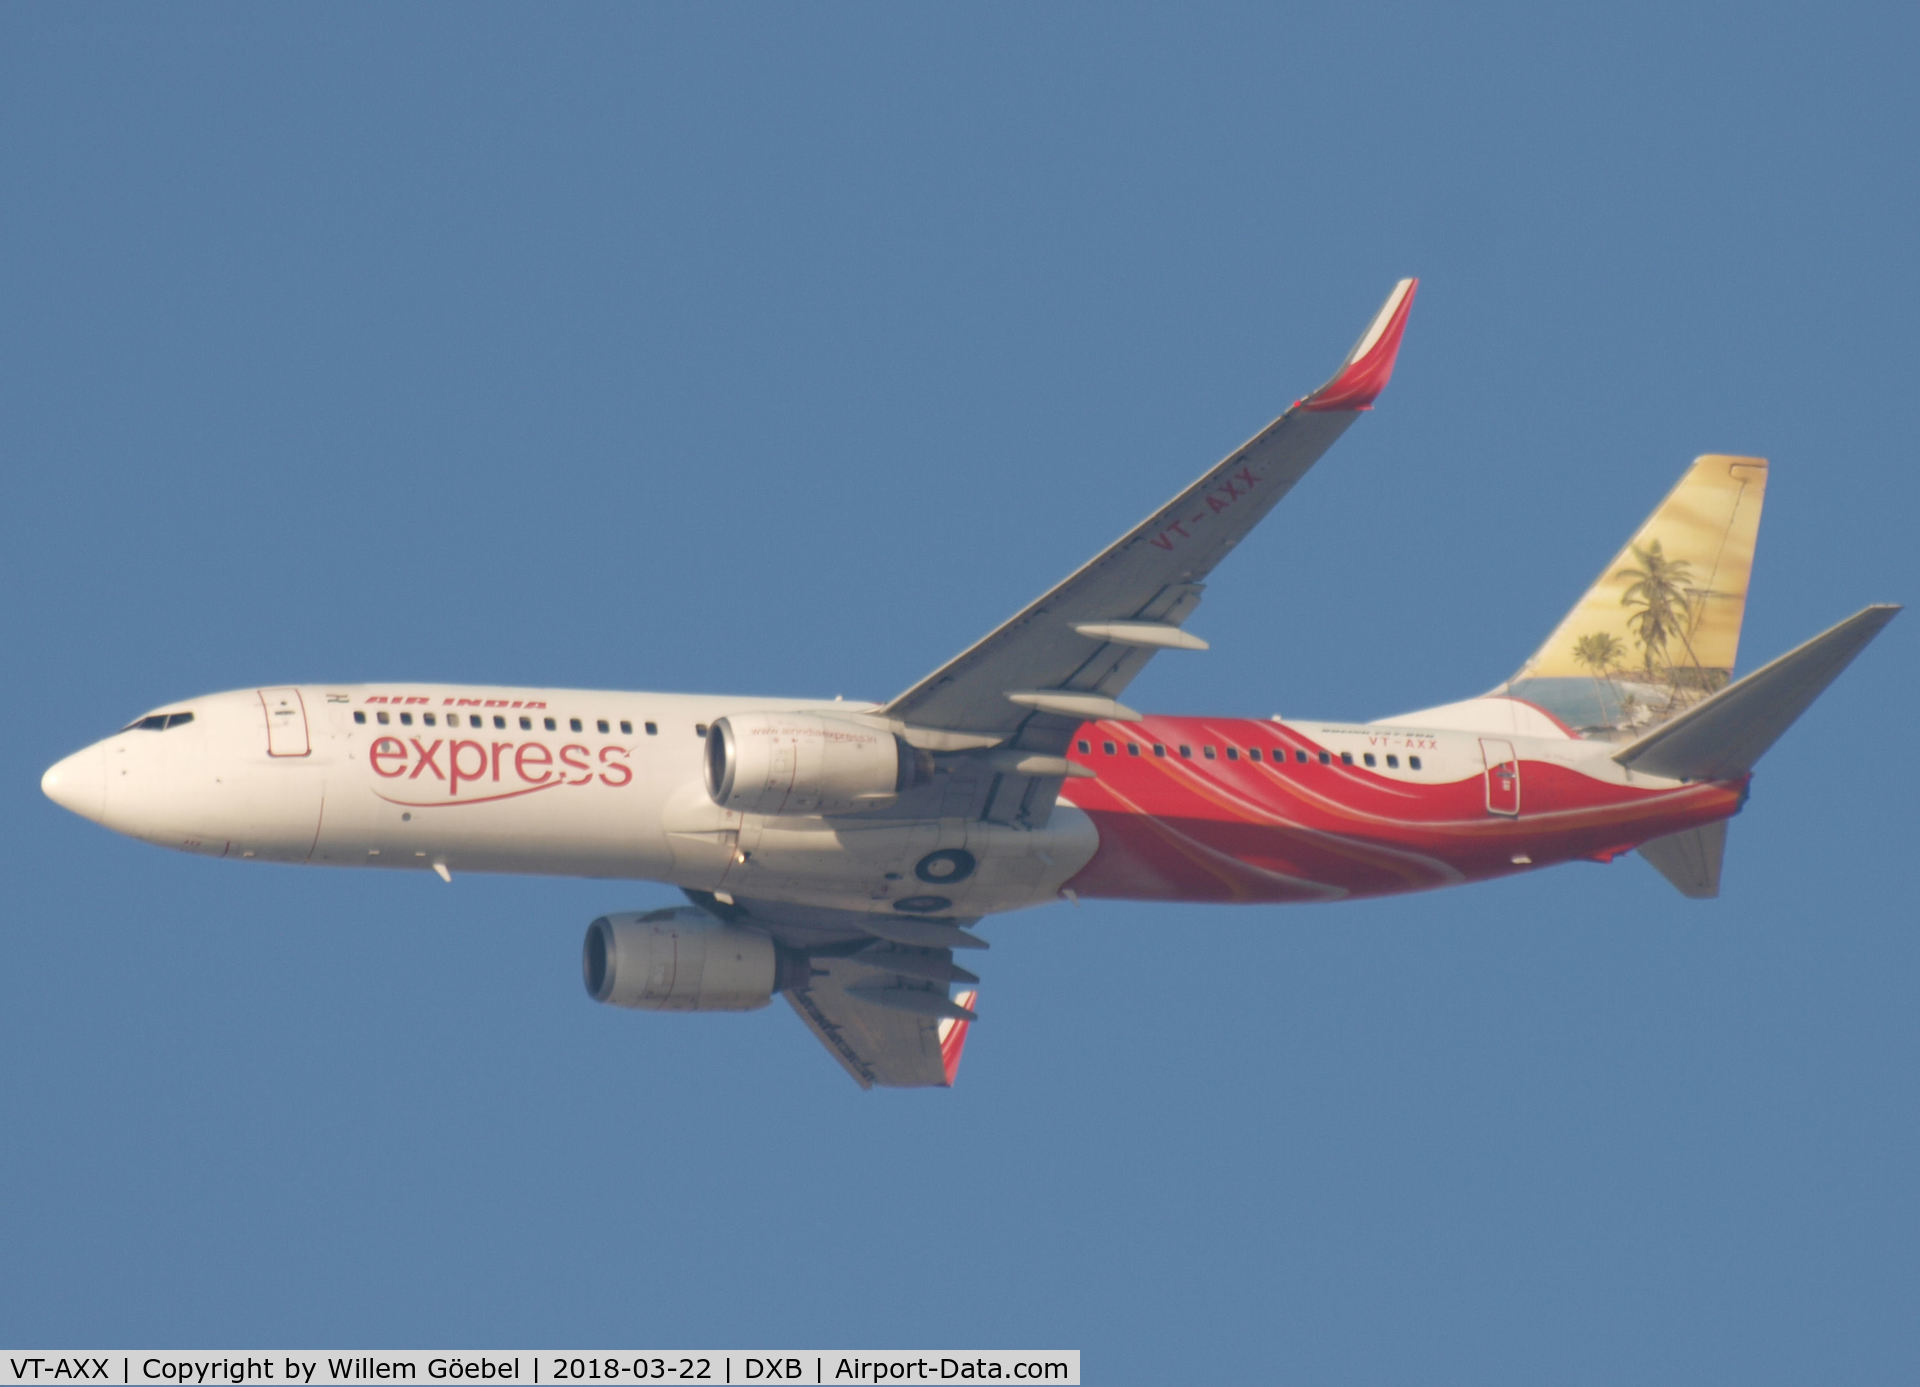 VT-AXX, 2008 Boeing 737-8HG C/N 36336/2672, Take off from DUBAI INTERNATIONAL Airport